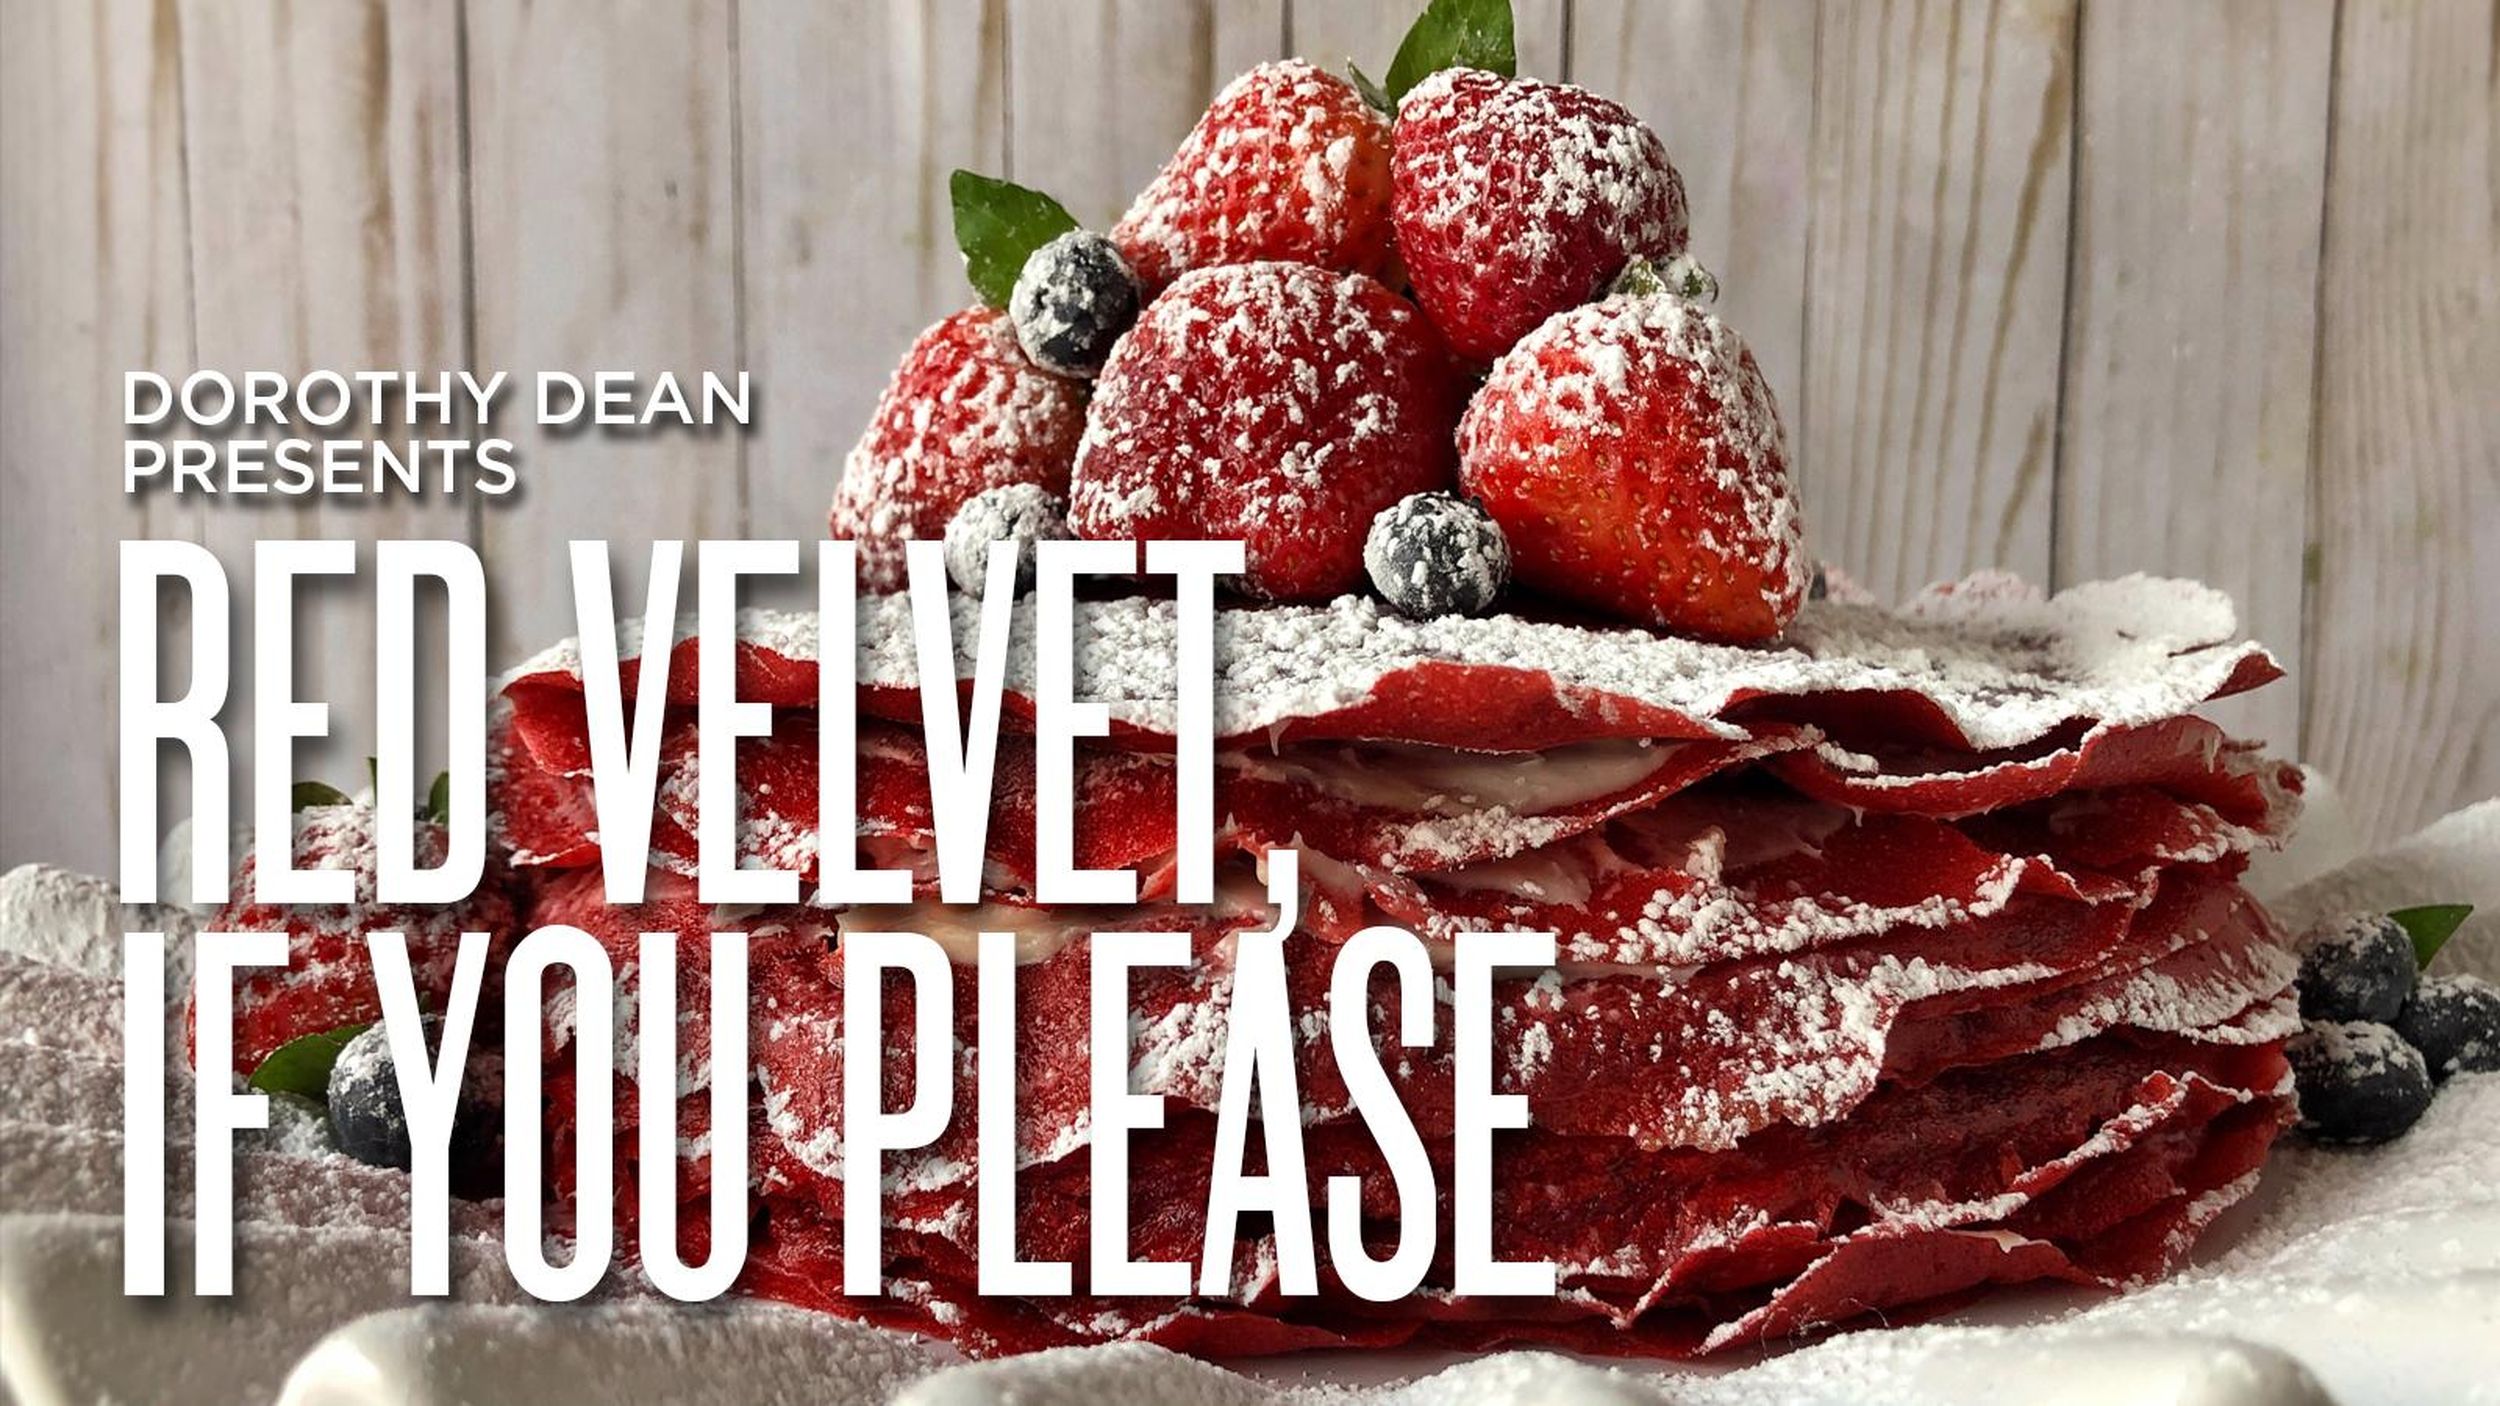 Cherry Velvet - We've got a treat for you this April!